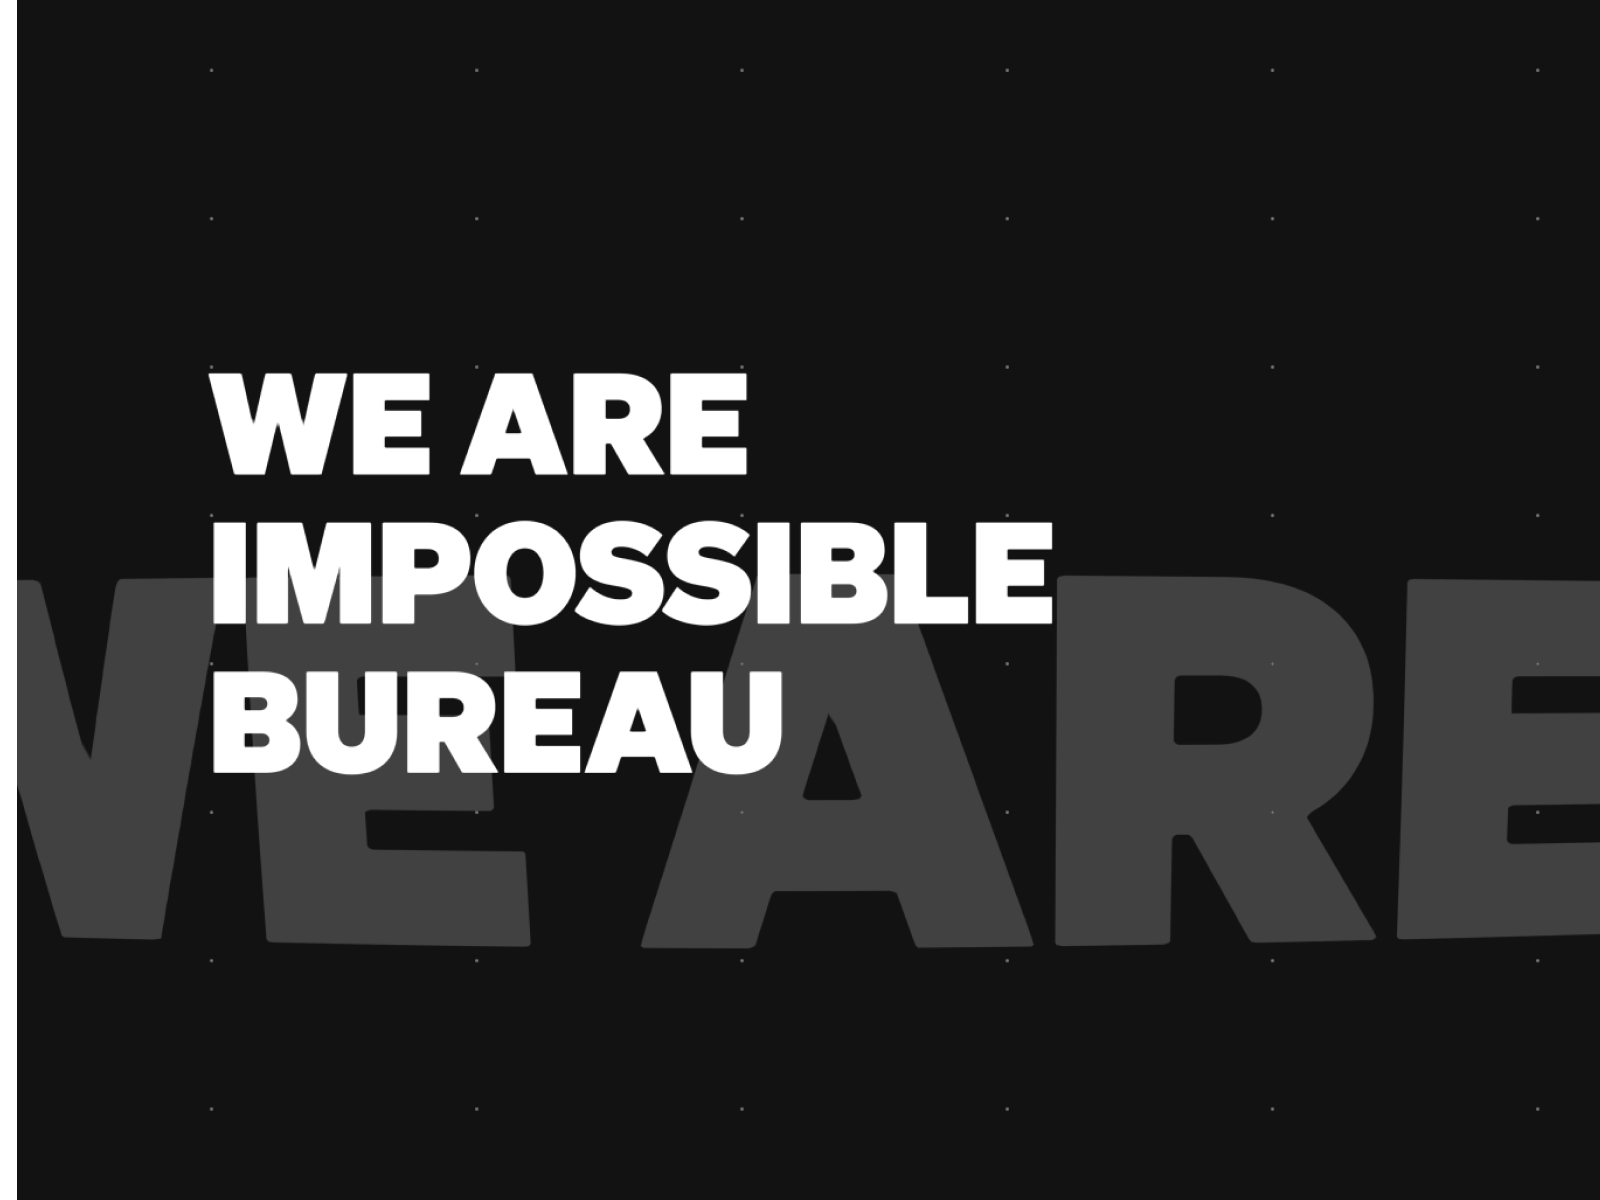 (c) Impossible-bureau.com